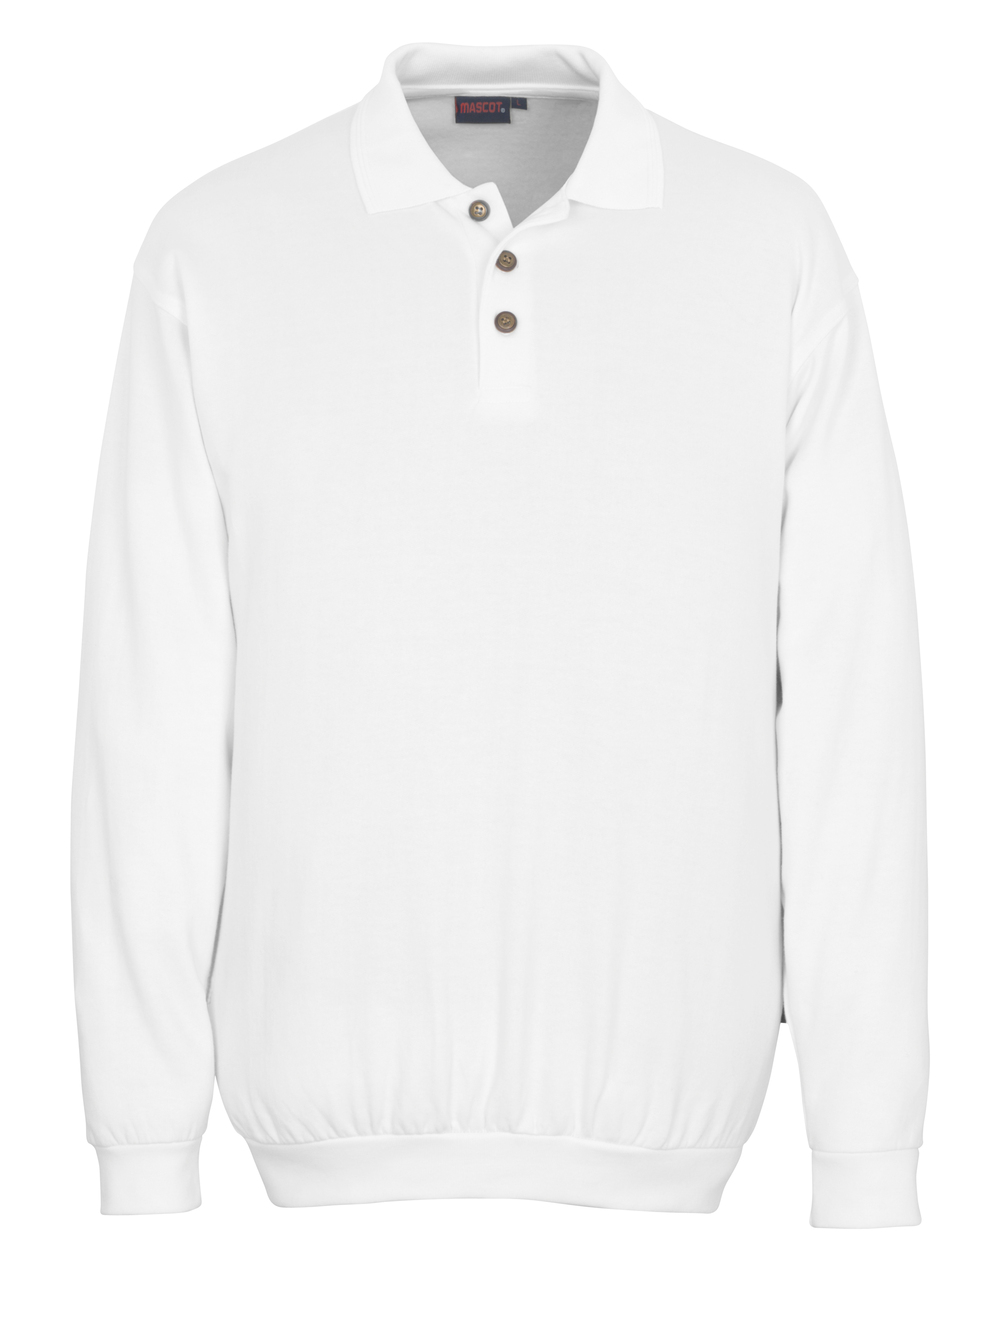 MASCOT-Workwear, Polo-Sweatshirt, Trinidad, 310 g/m², weiß